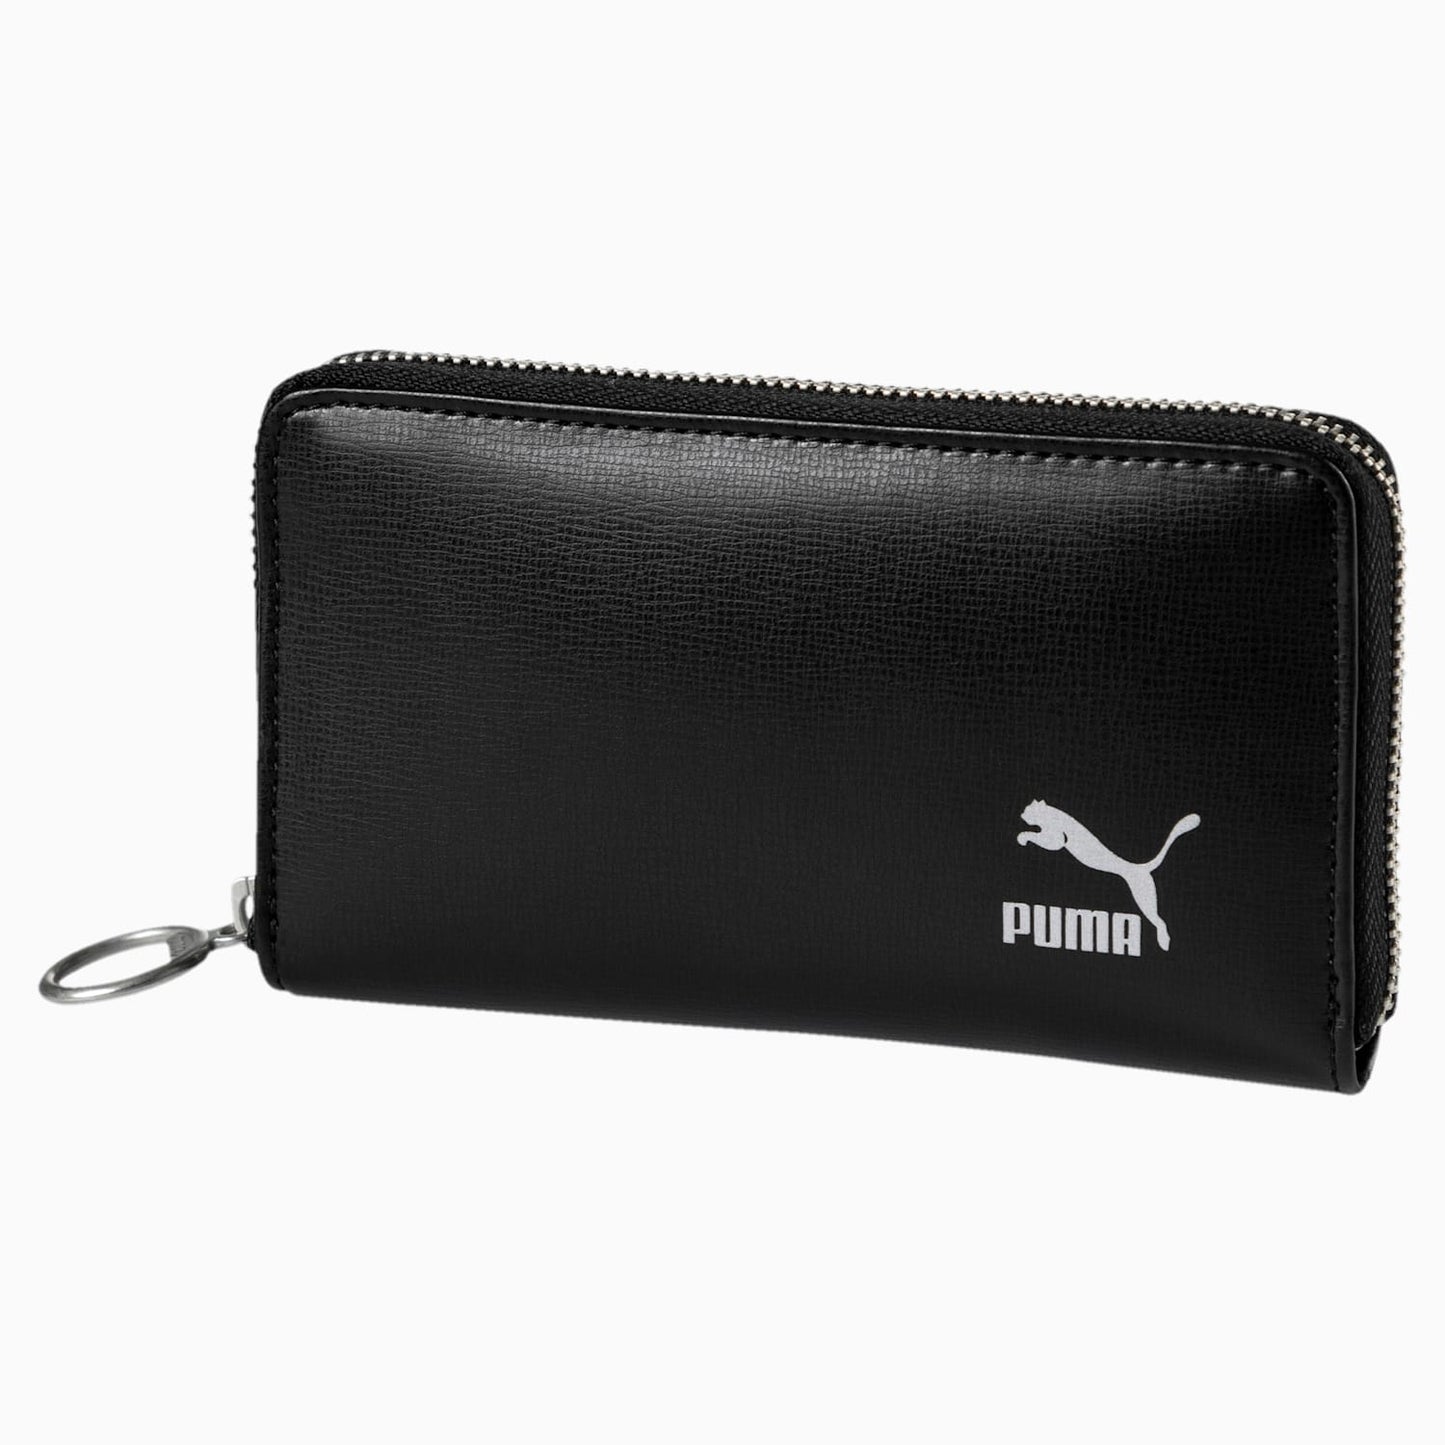 puma wallet black-074817 01